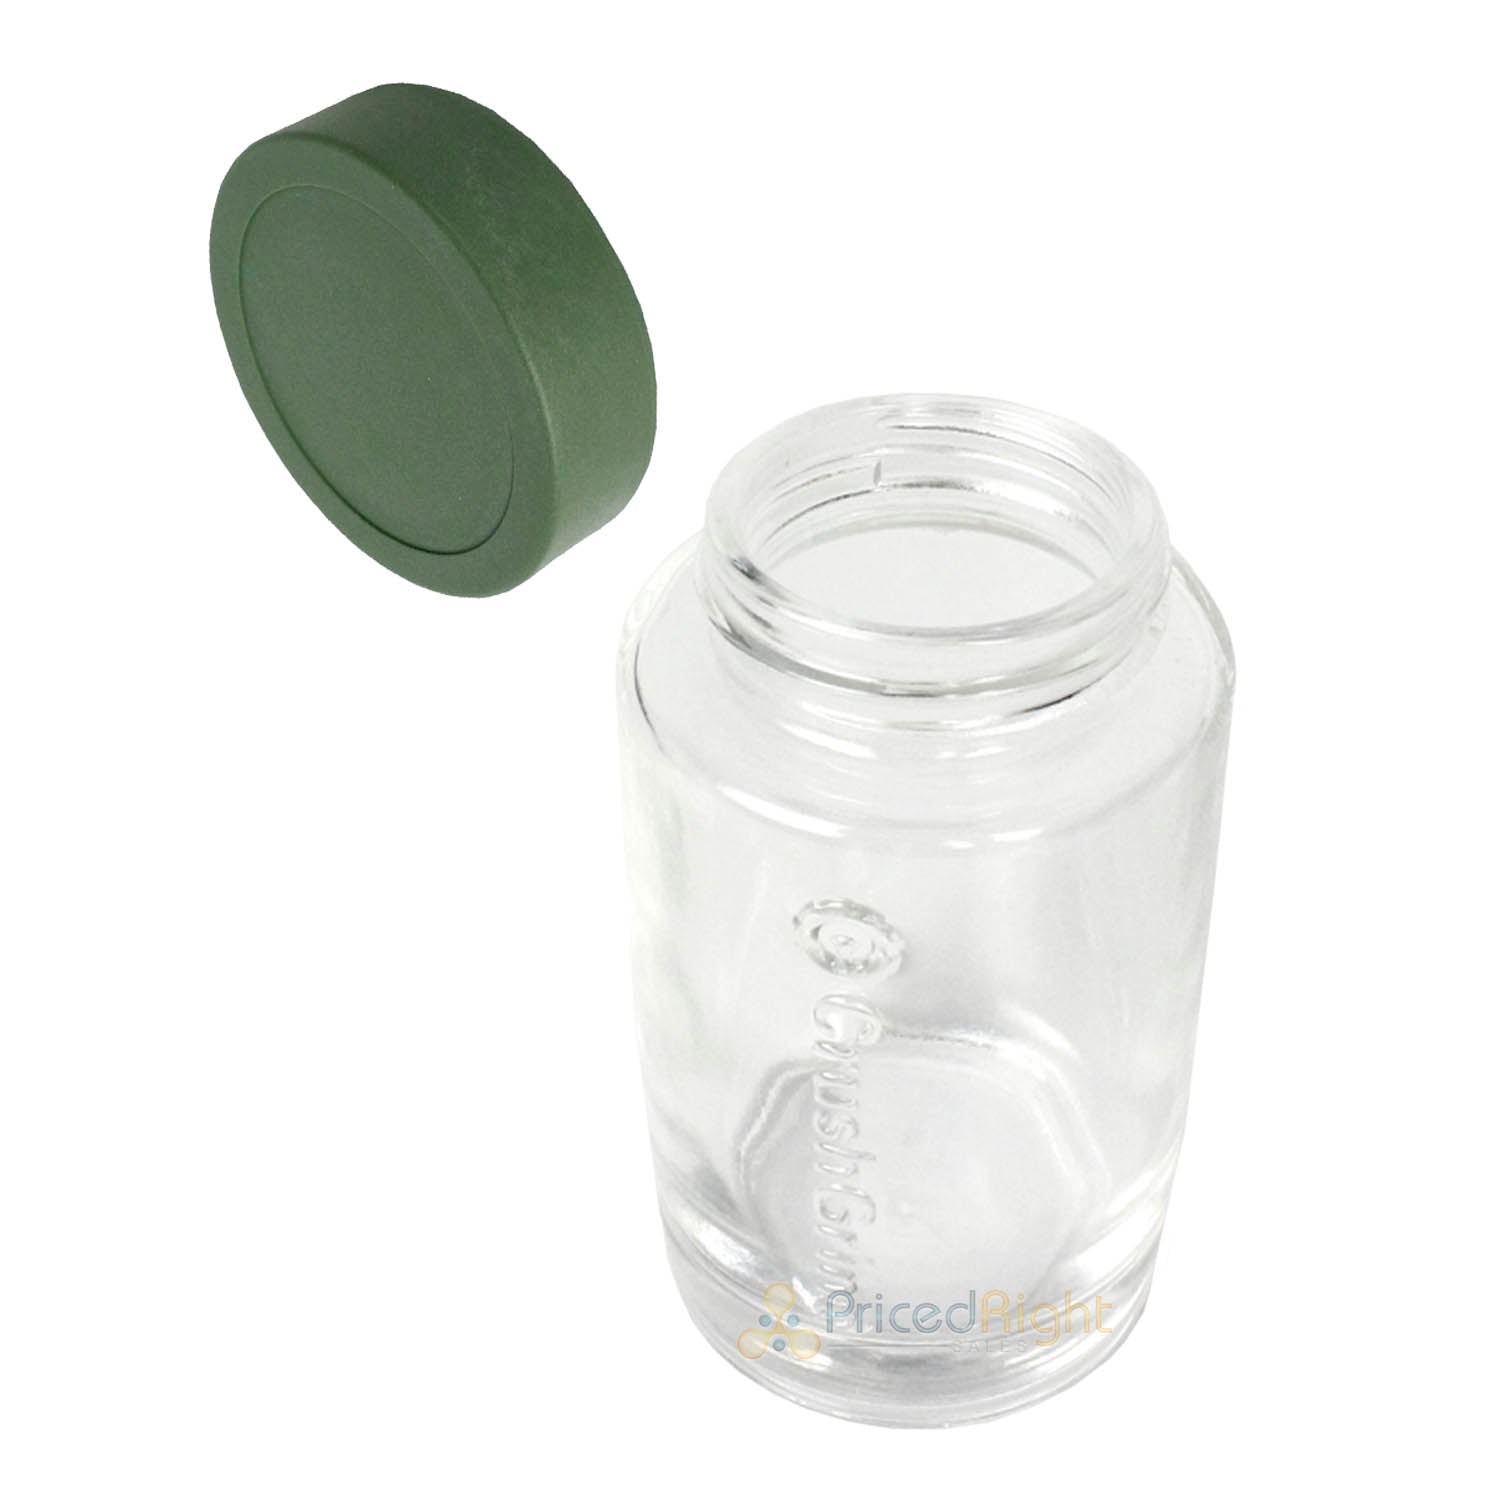 CrushGrind Vaasa Glass Spice Jars Biocomposite Screw On Lid 2 Pc Green 94mm